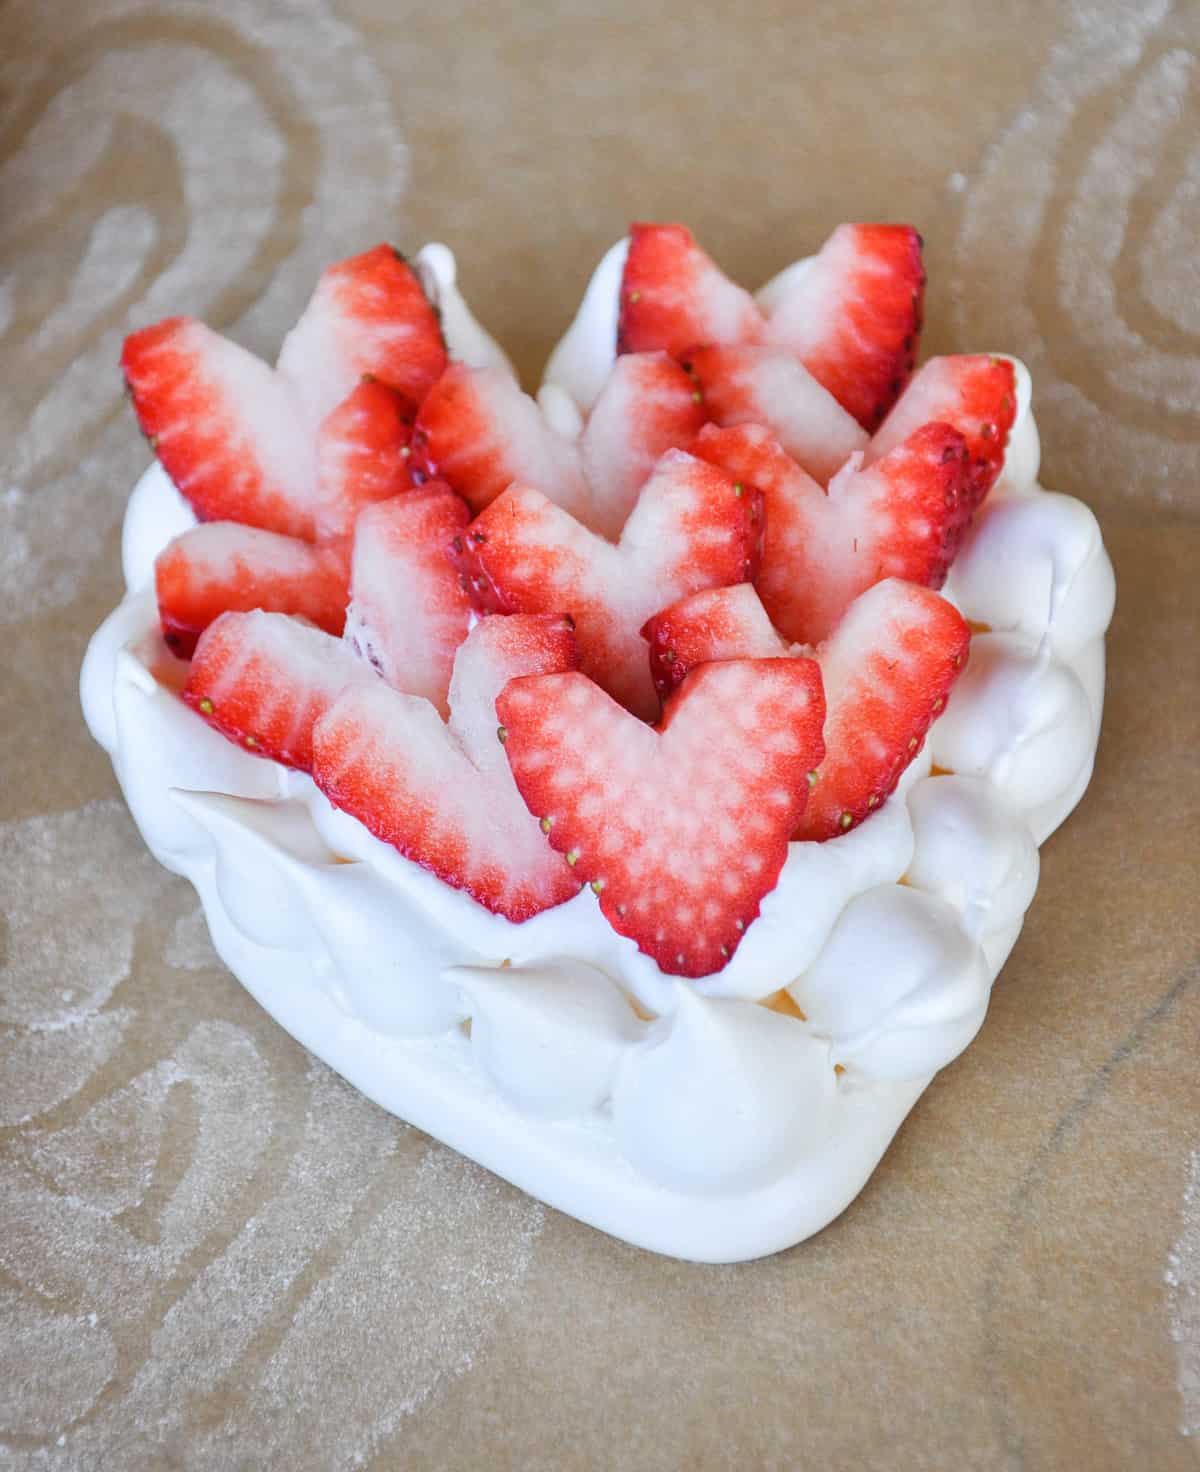 Top meringue with sliced strawberries